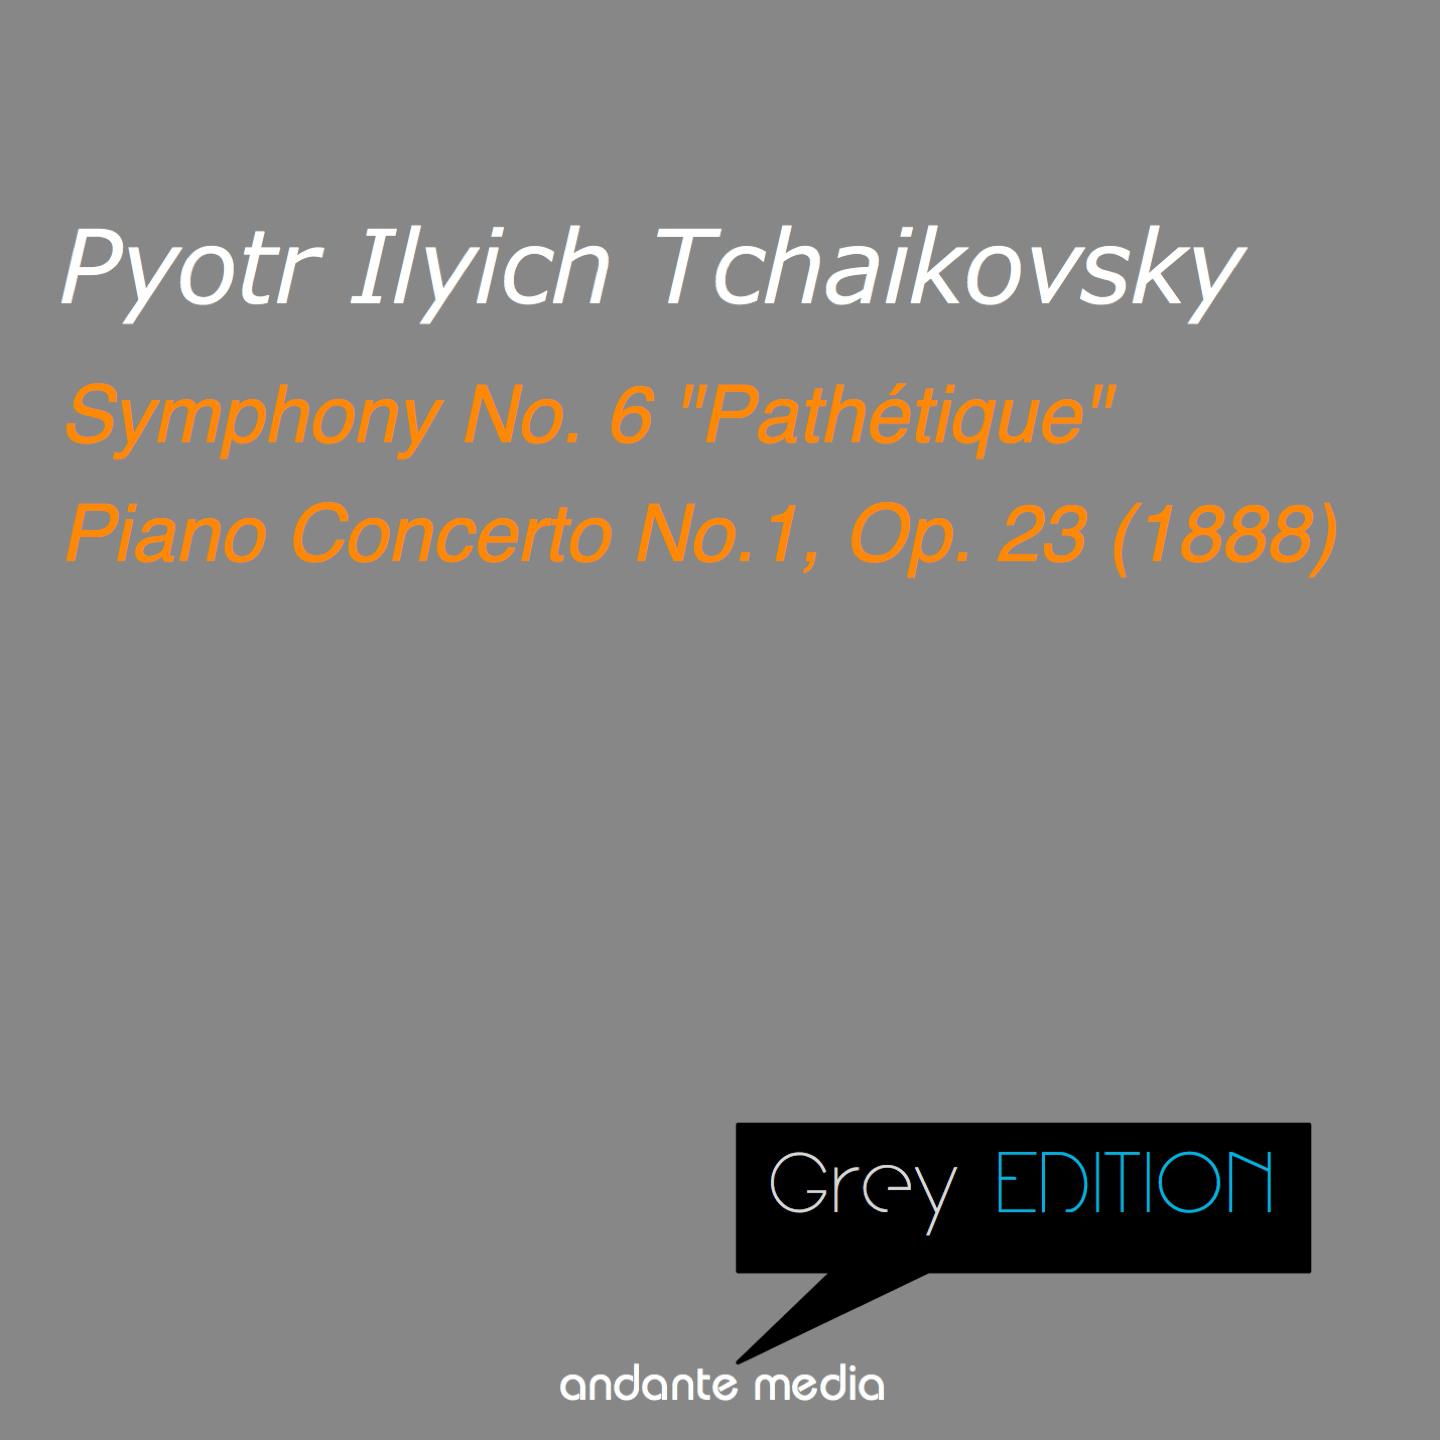 Grey Edition  Tchaikowsky: Symphony No. 6 " Pathe tique"  Piano Concerto No. 1, Op. 23 1888